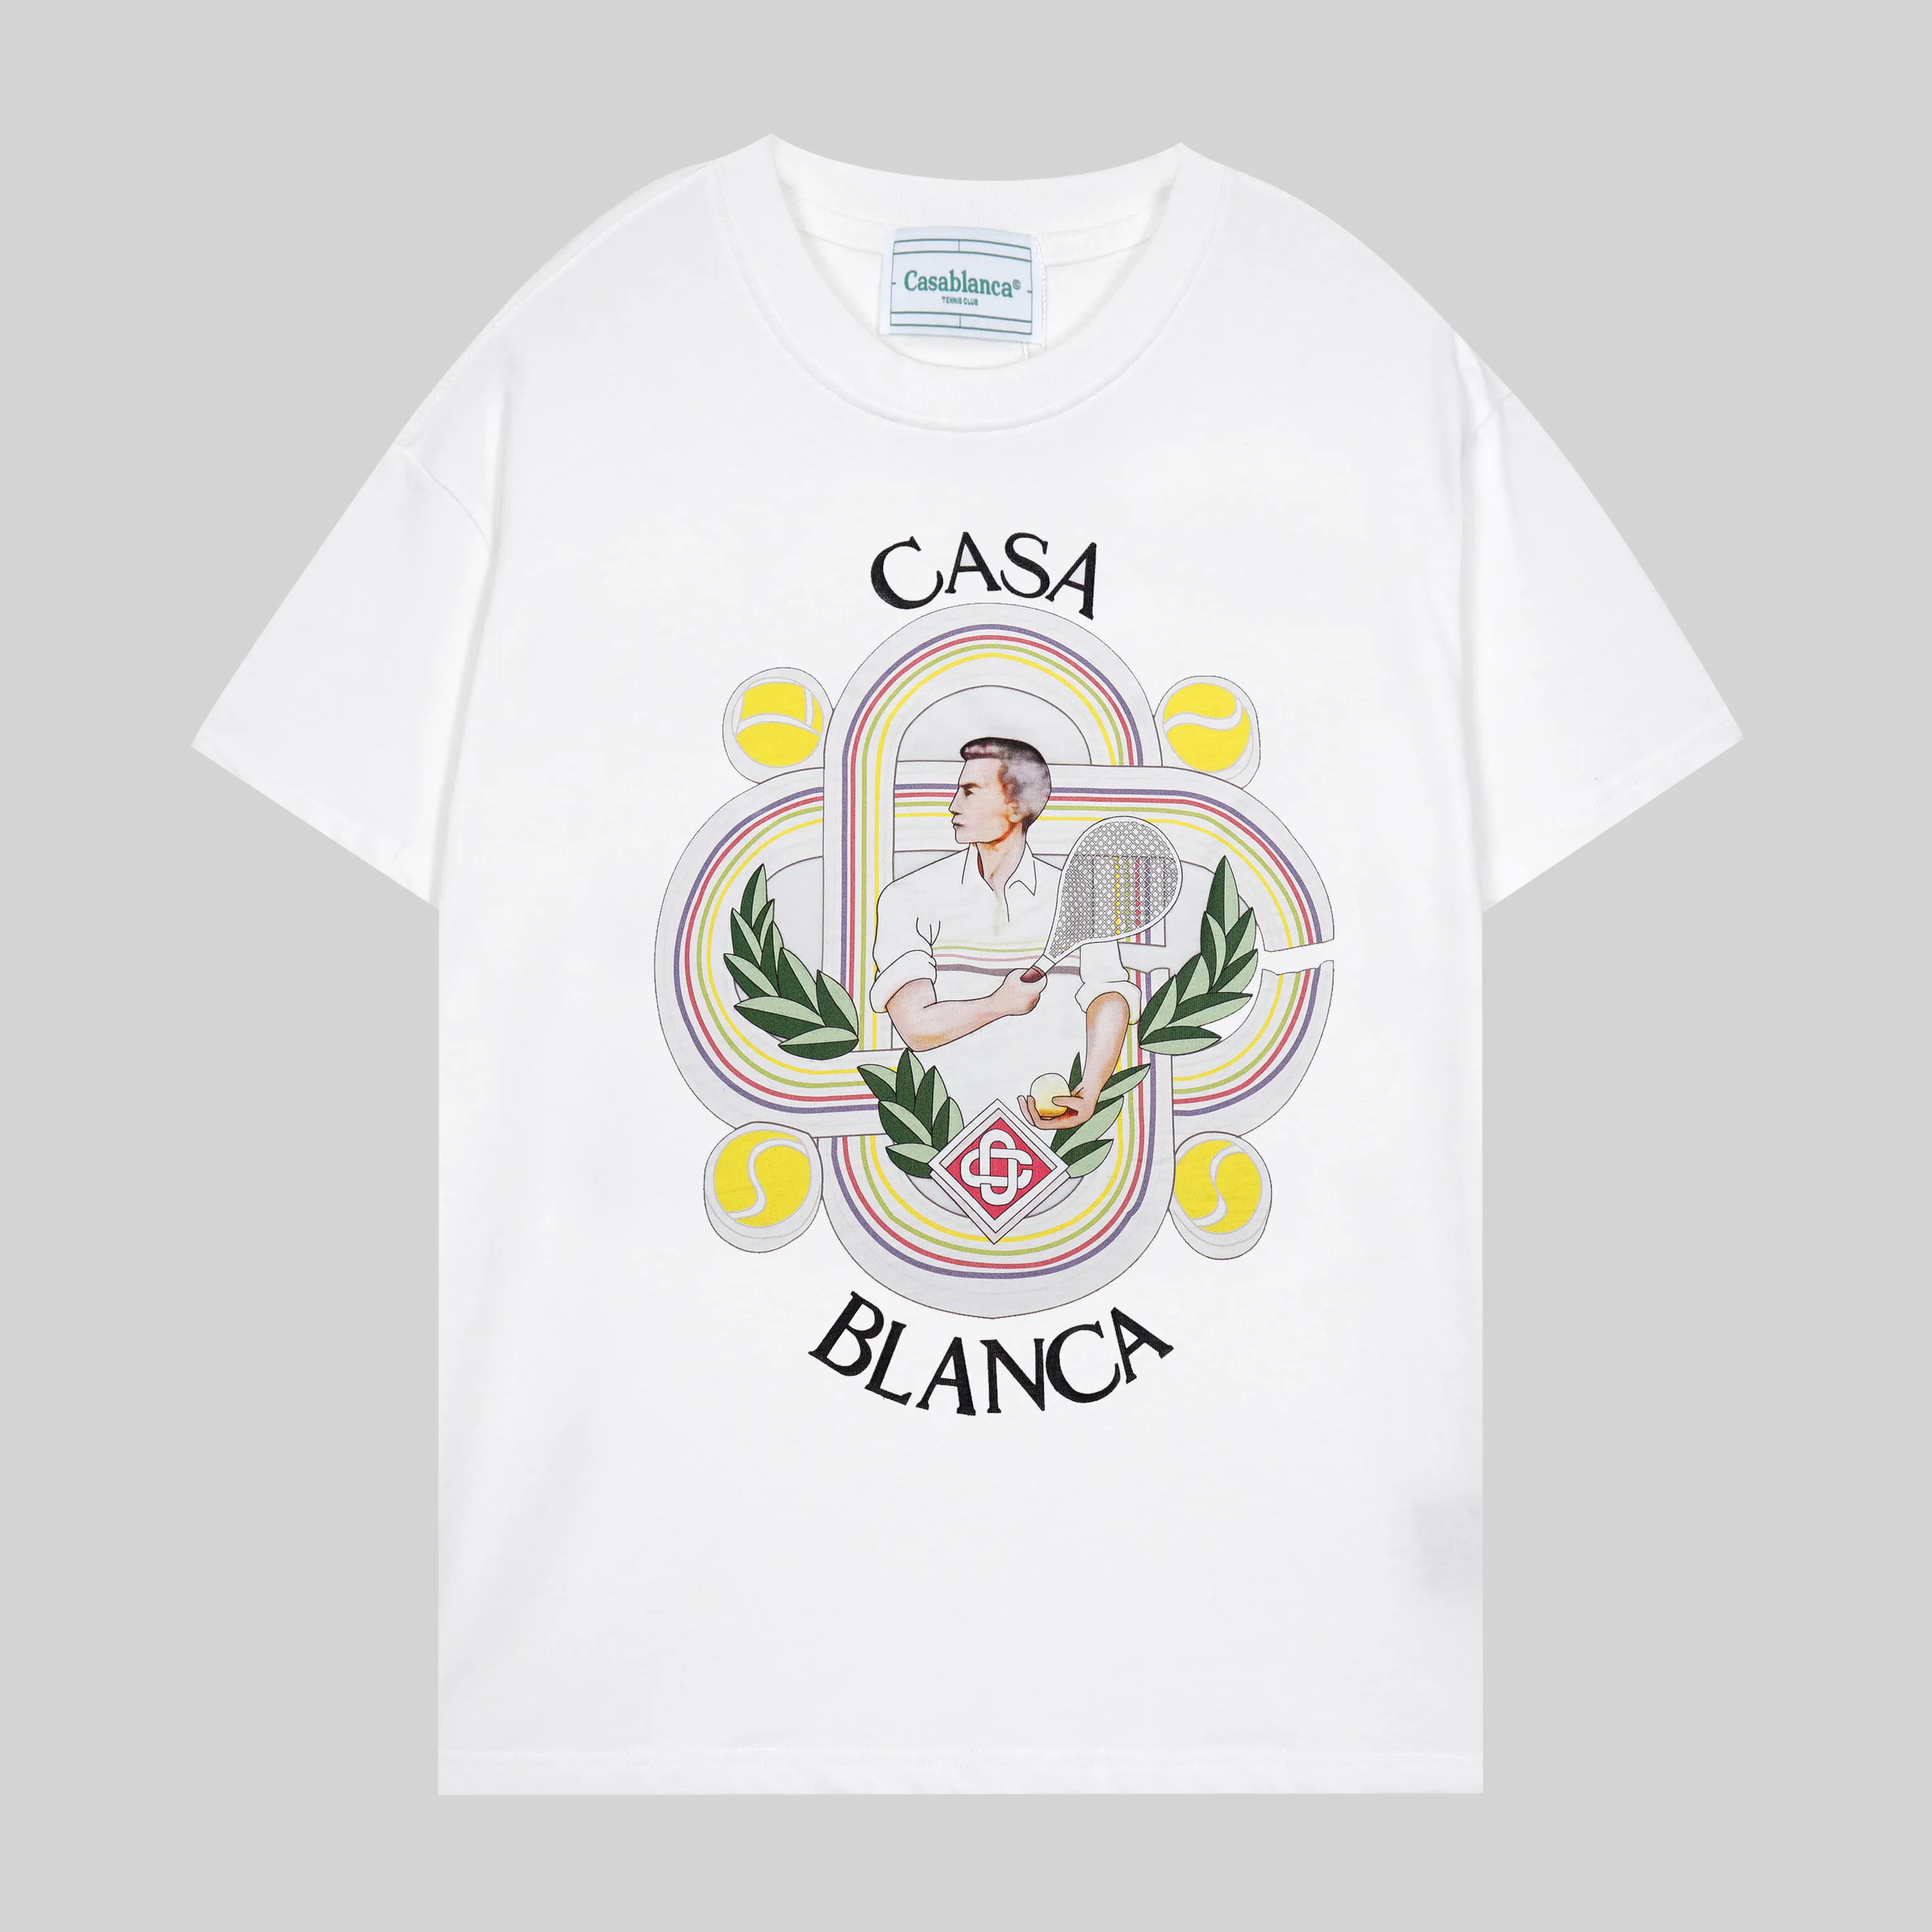 Casablanc Shirt Designer T -shirt Men Casa Blanca Luxe shirts heren heren t -shirts ontwerper dames tee shirt oversized casablanc shirt vrouw ronde nek katoenen korte mouw